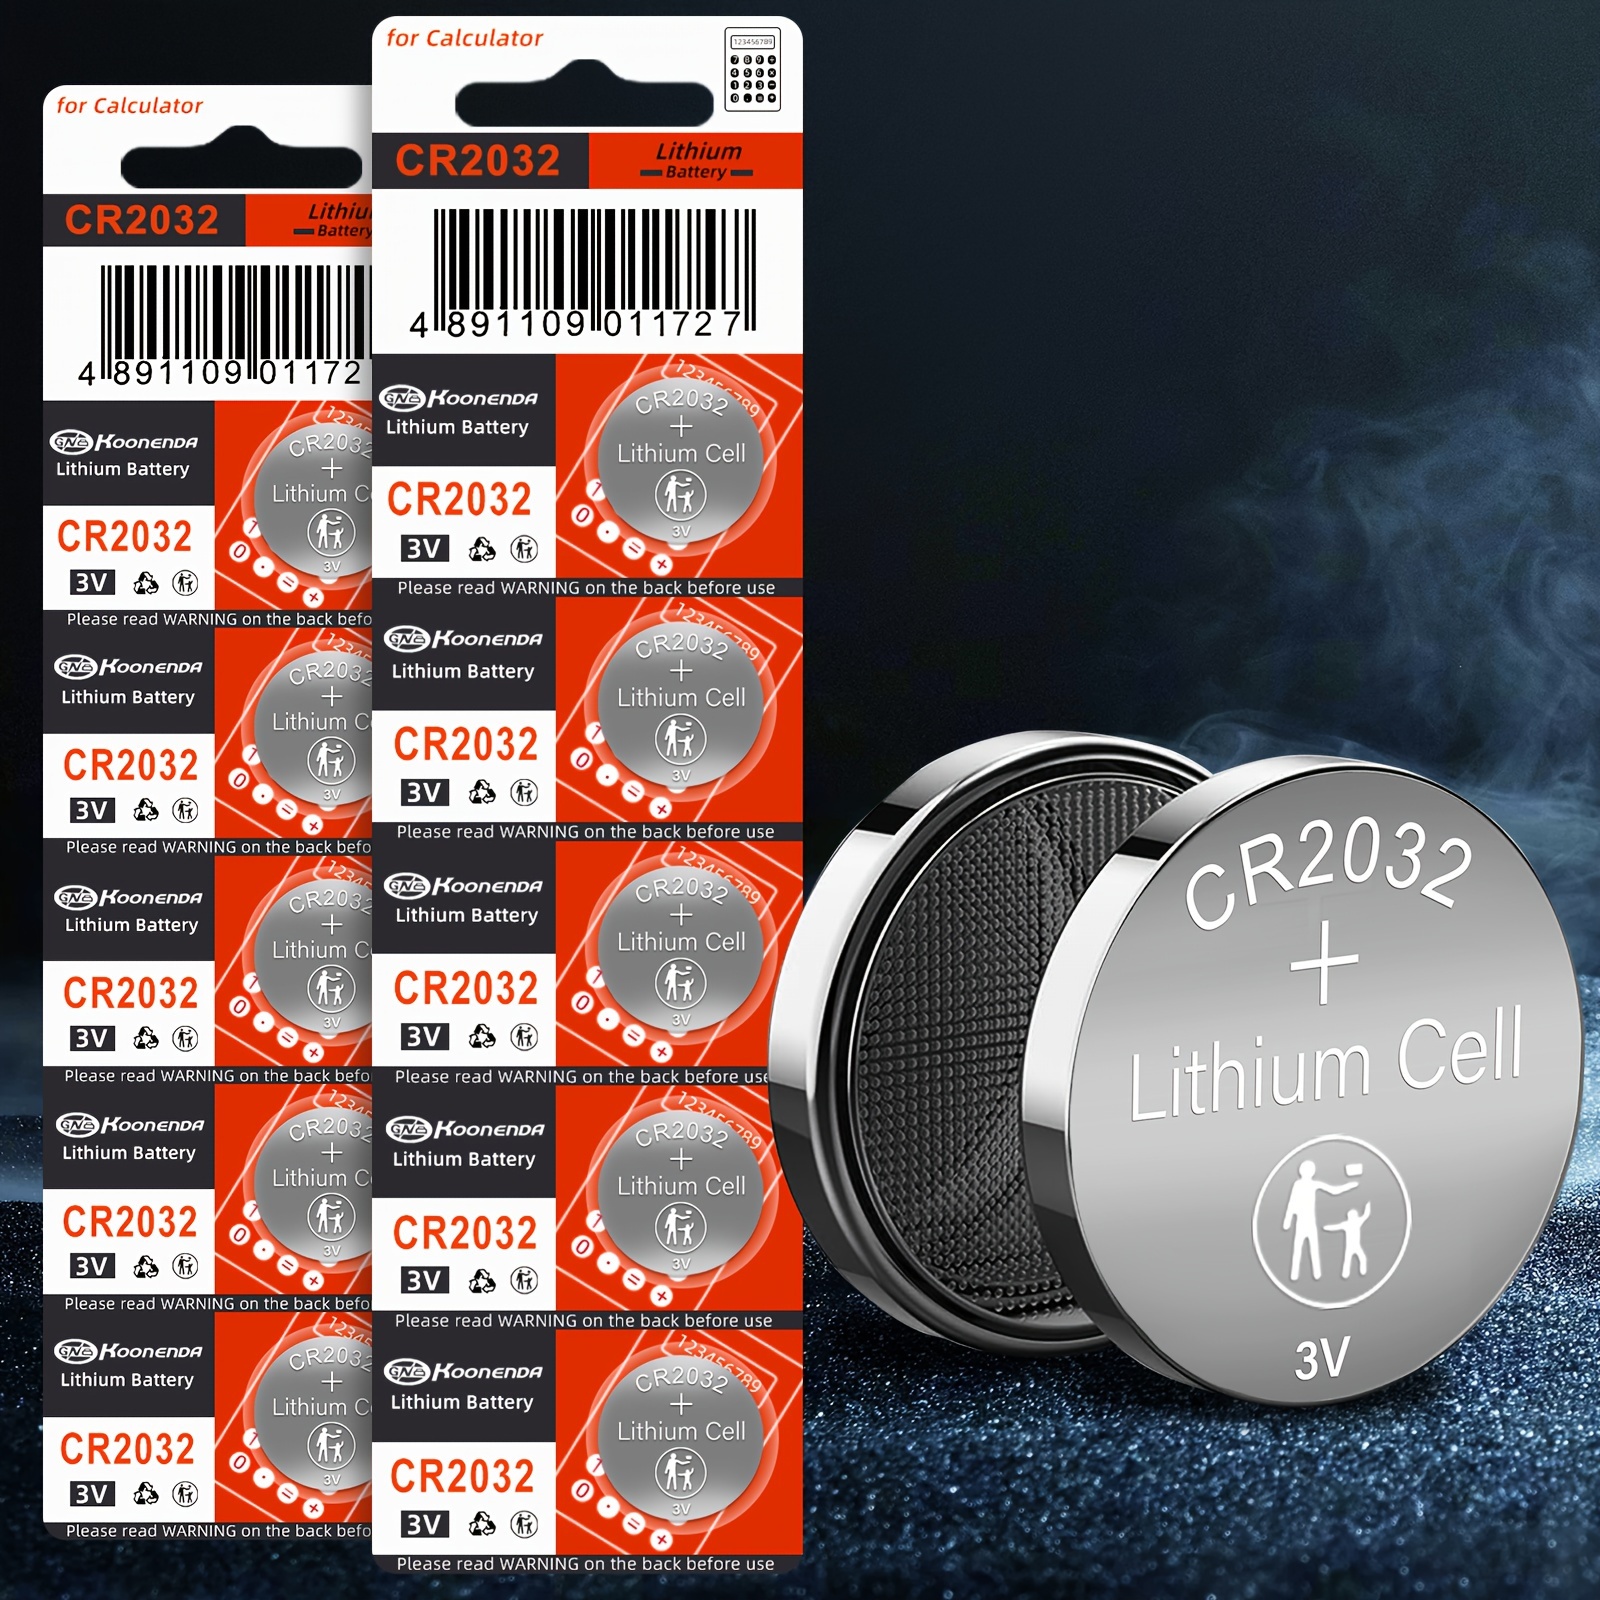 3V Lithium Coin Cell Battery (CR2032)